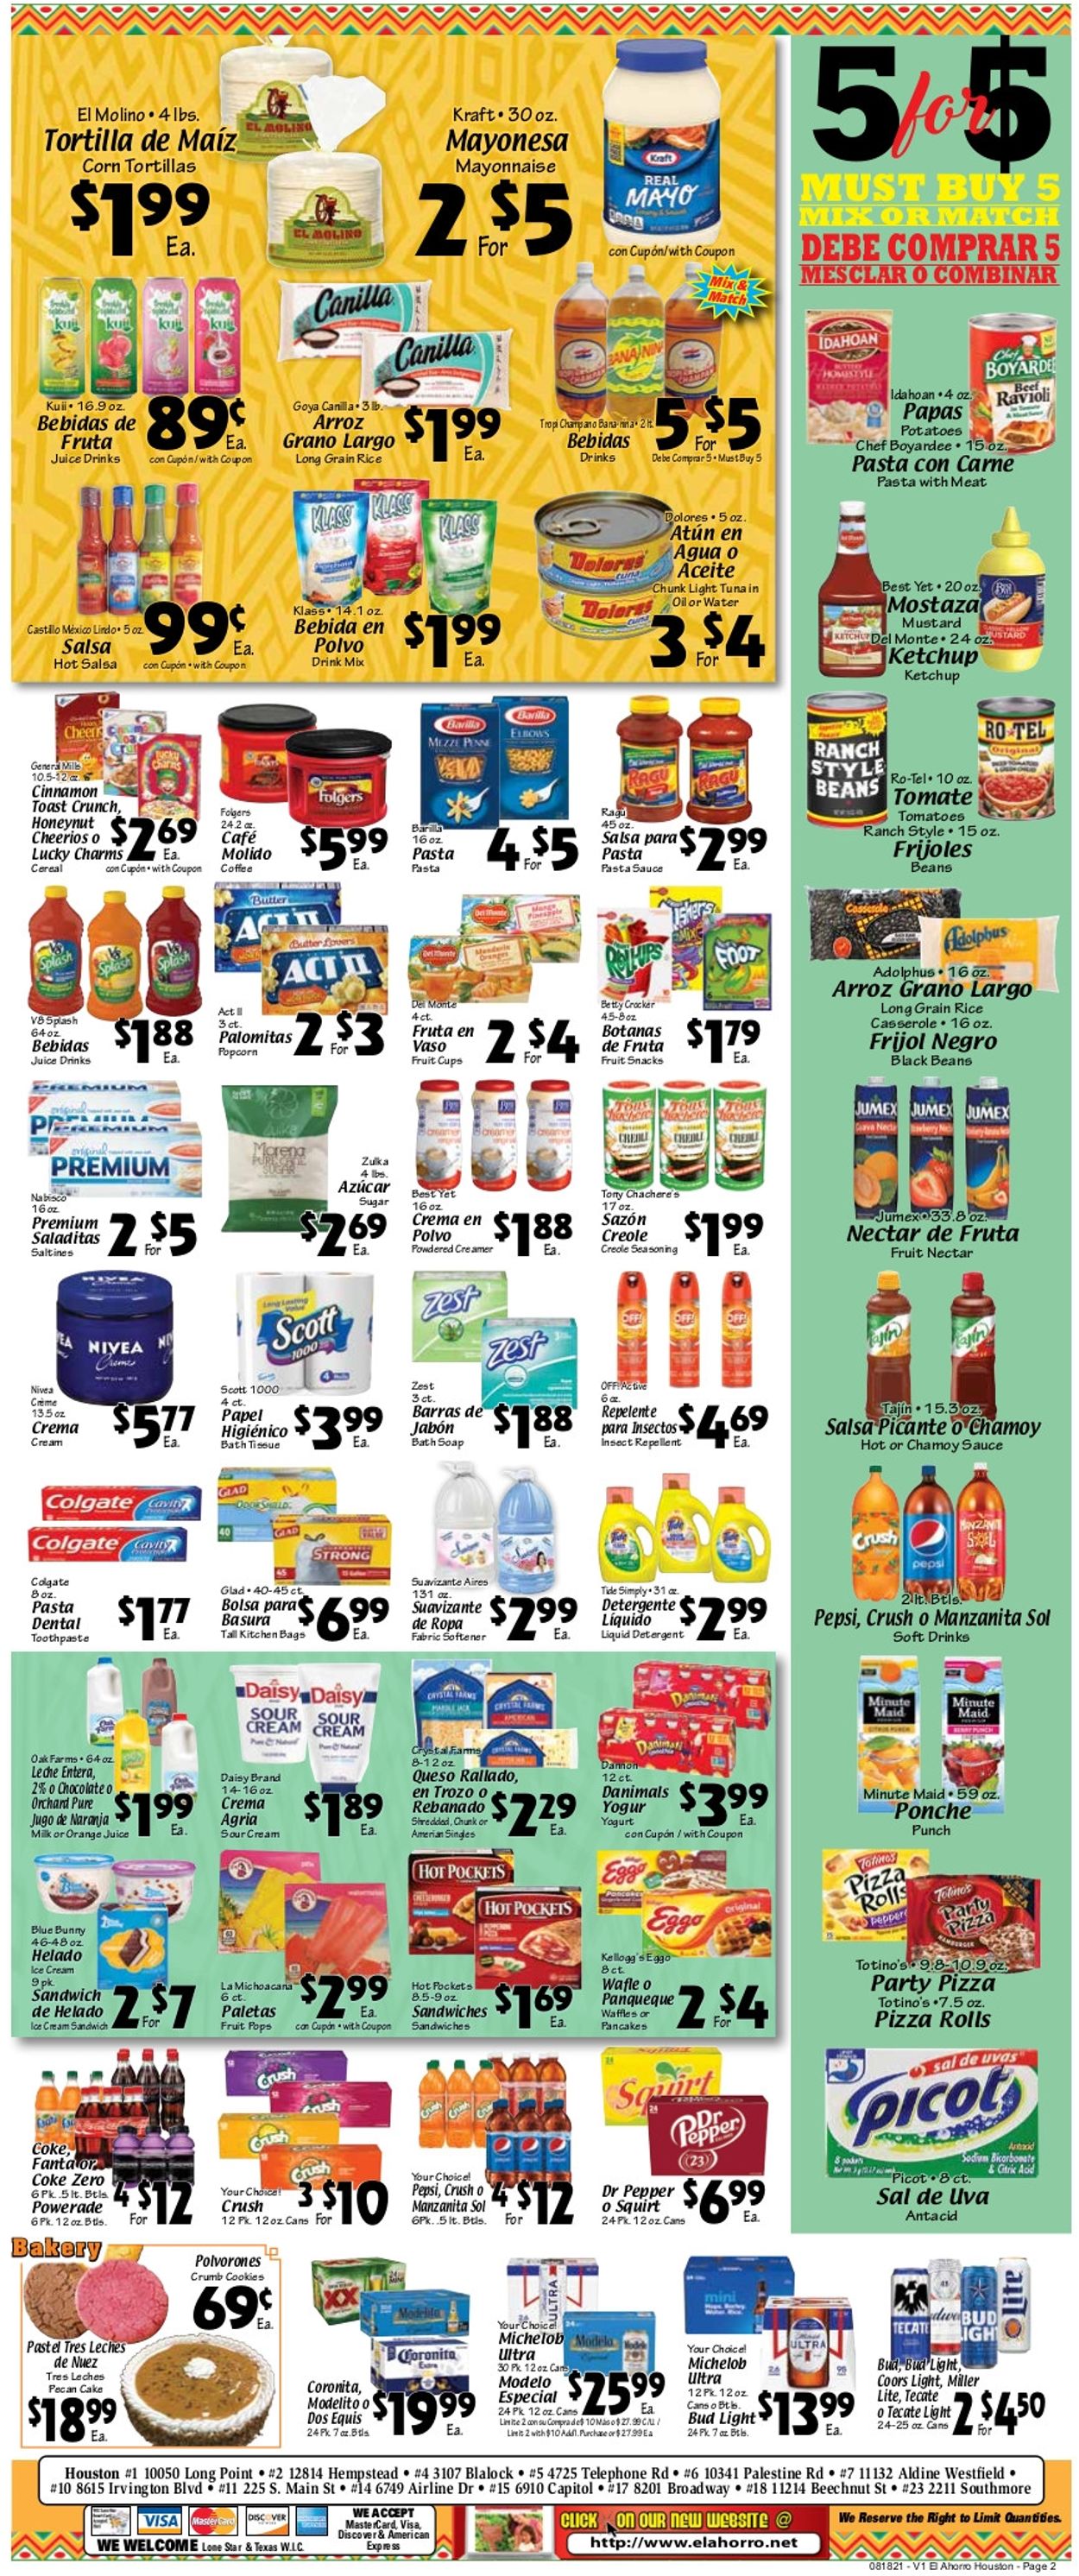 El Ahorro Supermarket Current weekly ad 08/18 - 08/24/2021 [2 ...